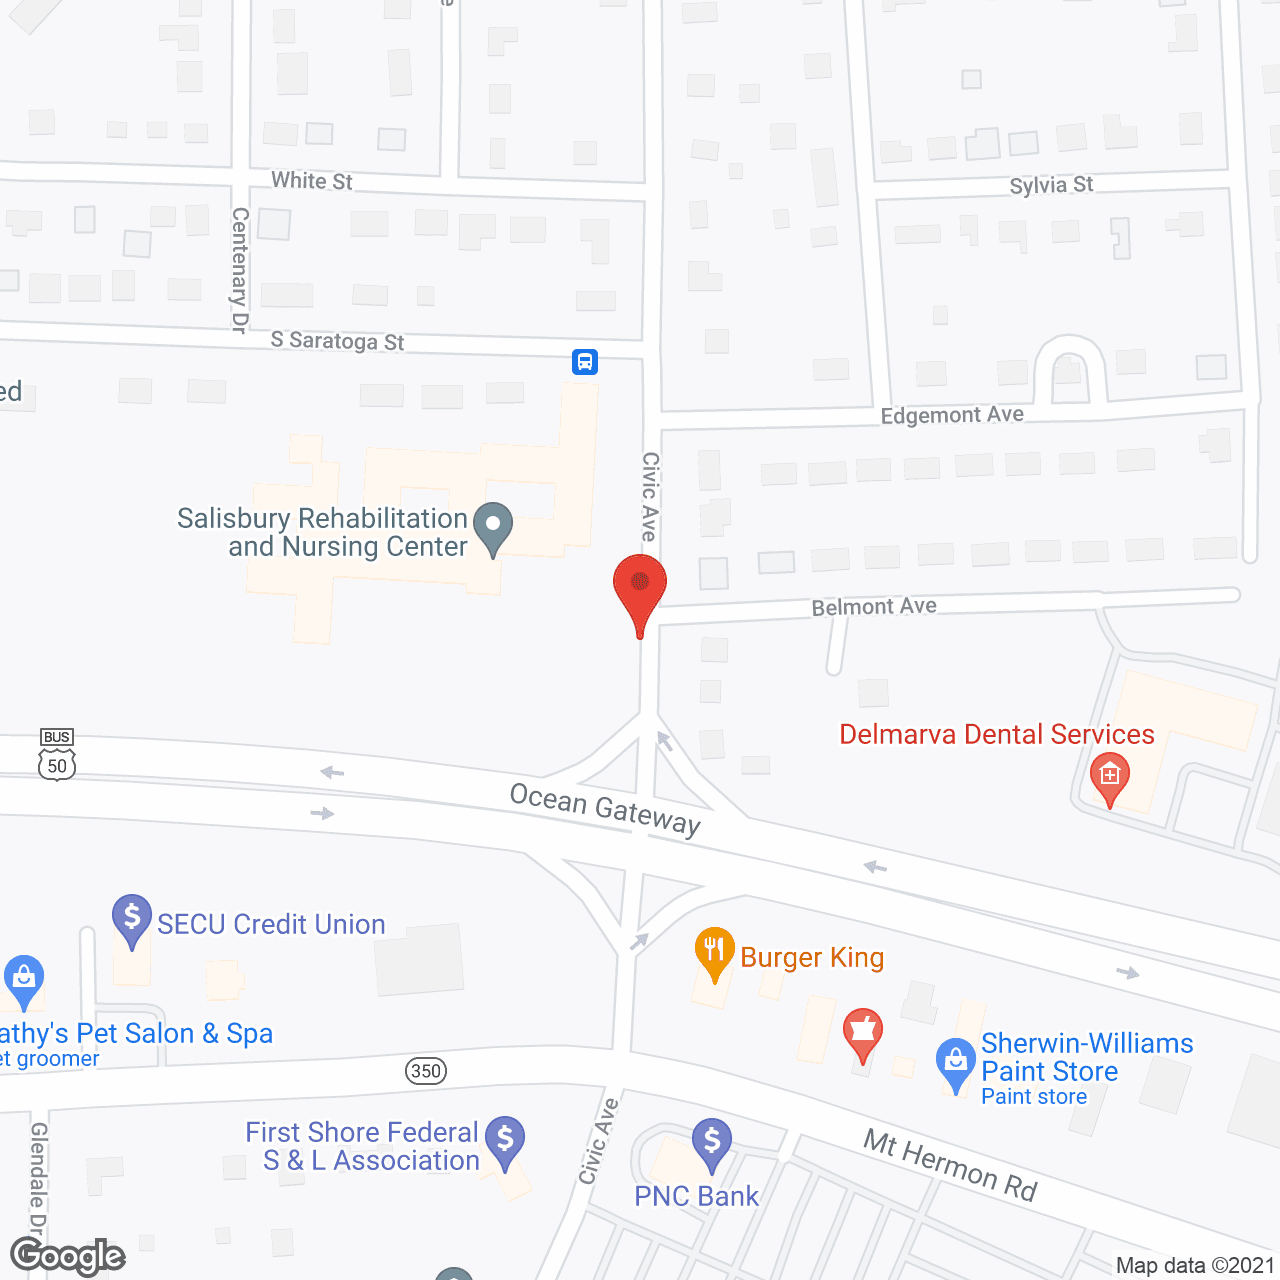 Salisbury Rehabilitation and Nursing Center in google map